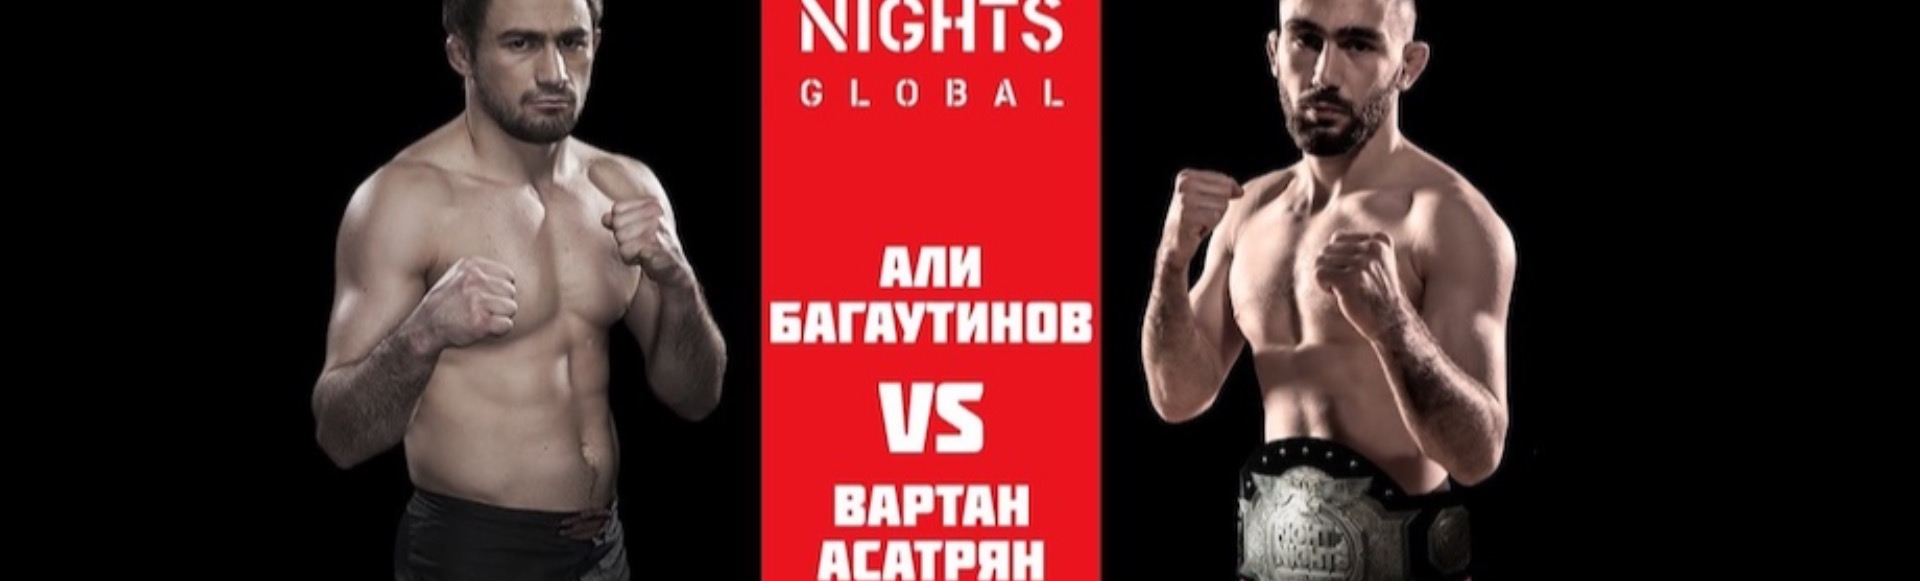 FIGHT NIGHTS GLOBAL 92